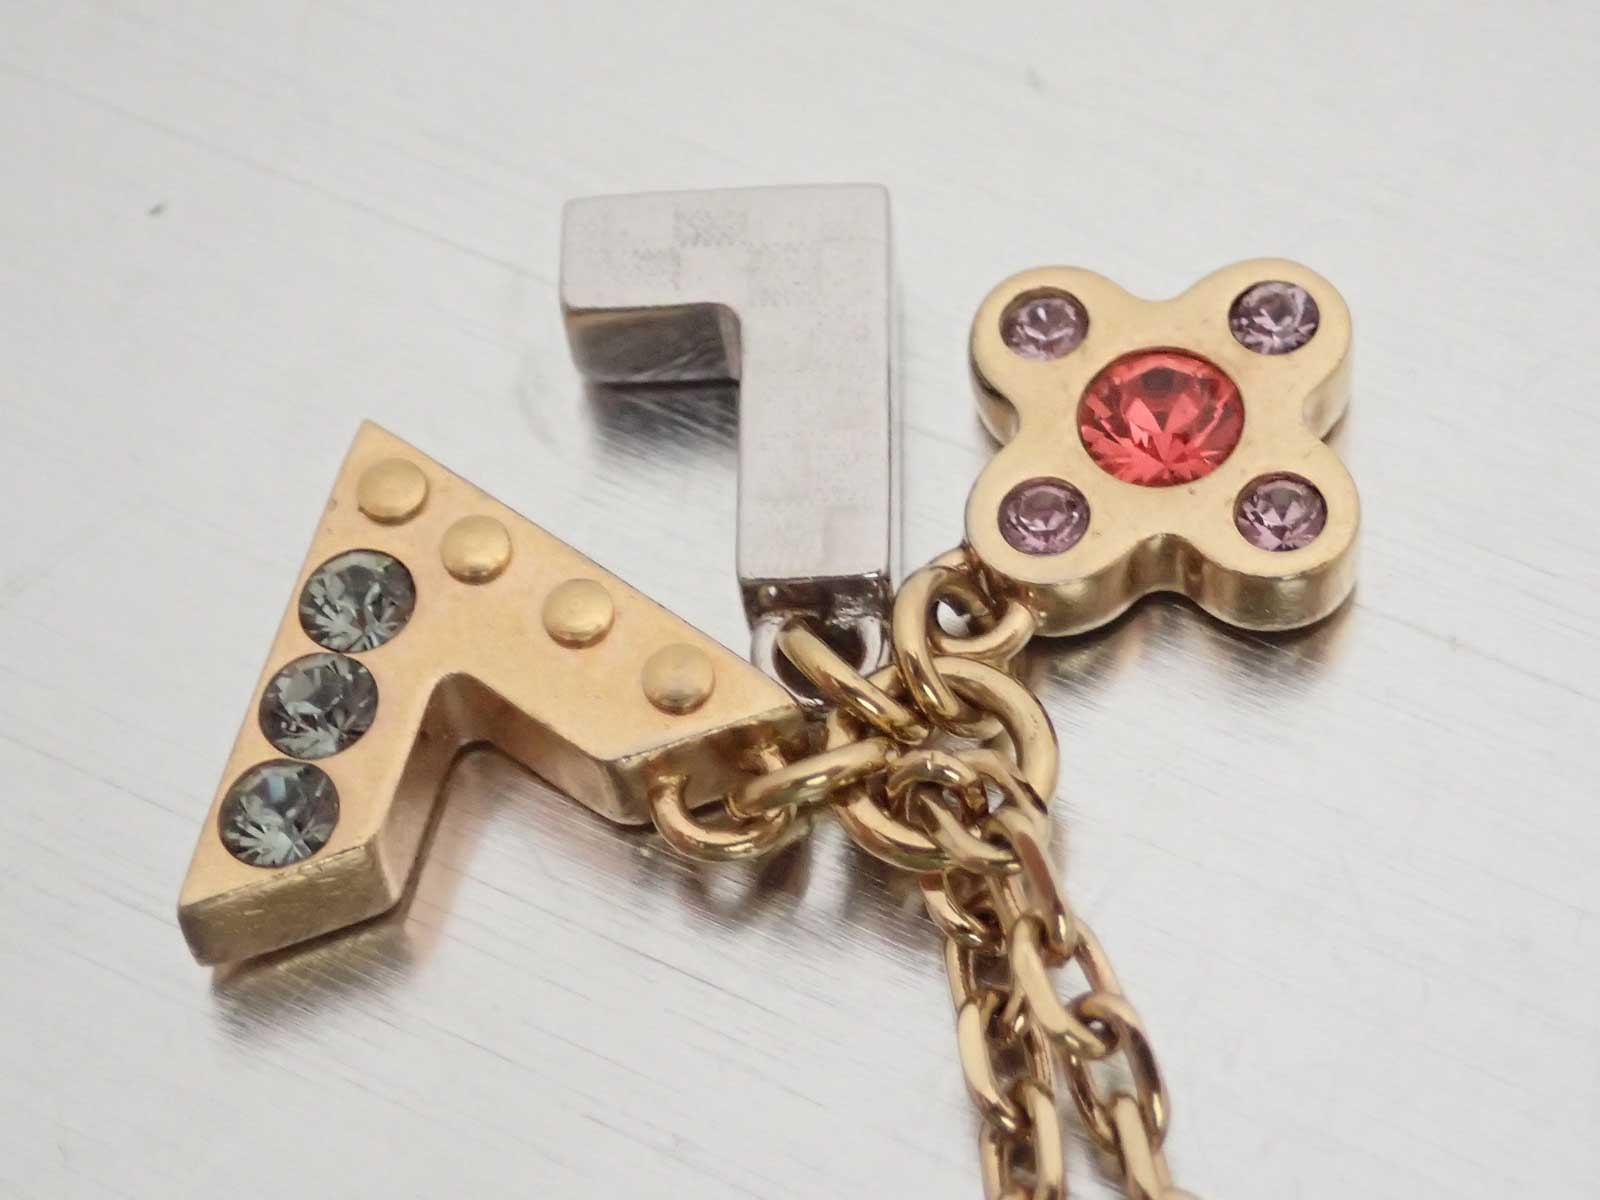 Auth Louis Vuitton LV Letters Chain Necklace Goldtone Rhinestone/Metal - e41736 | eBay